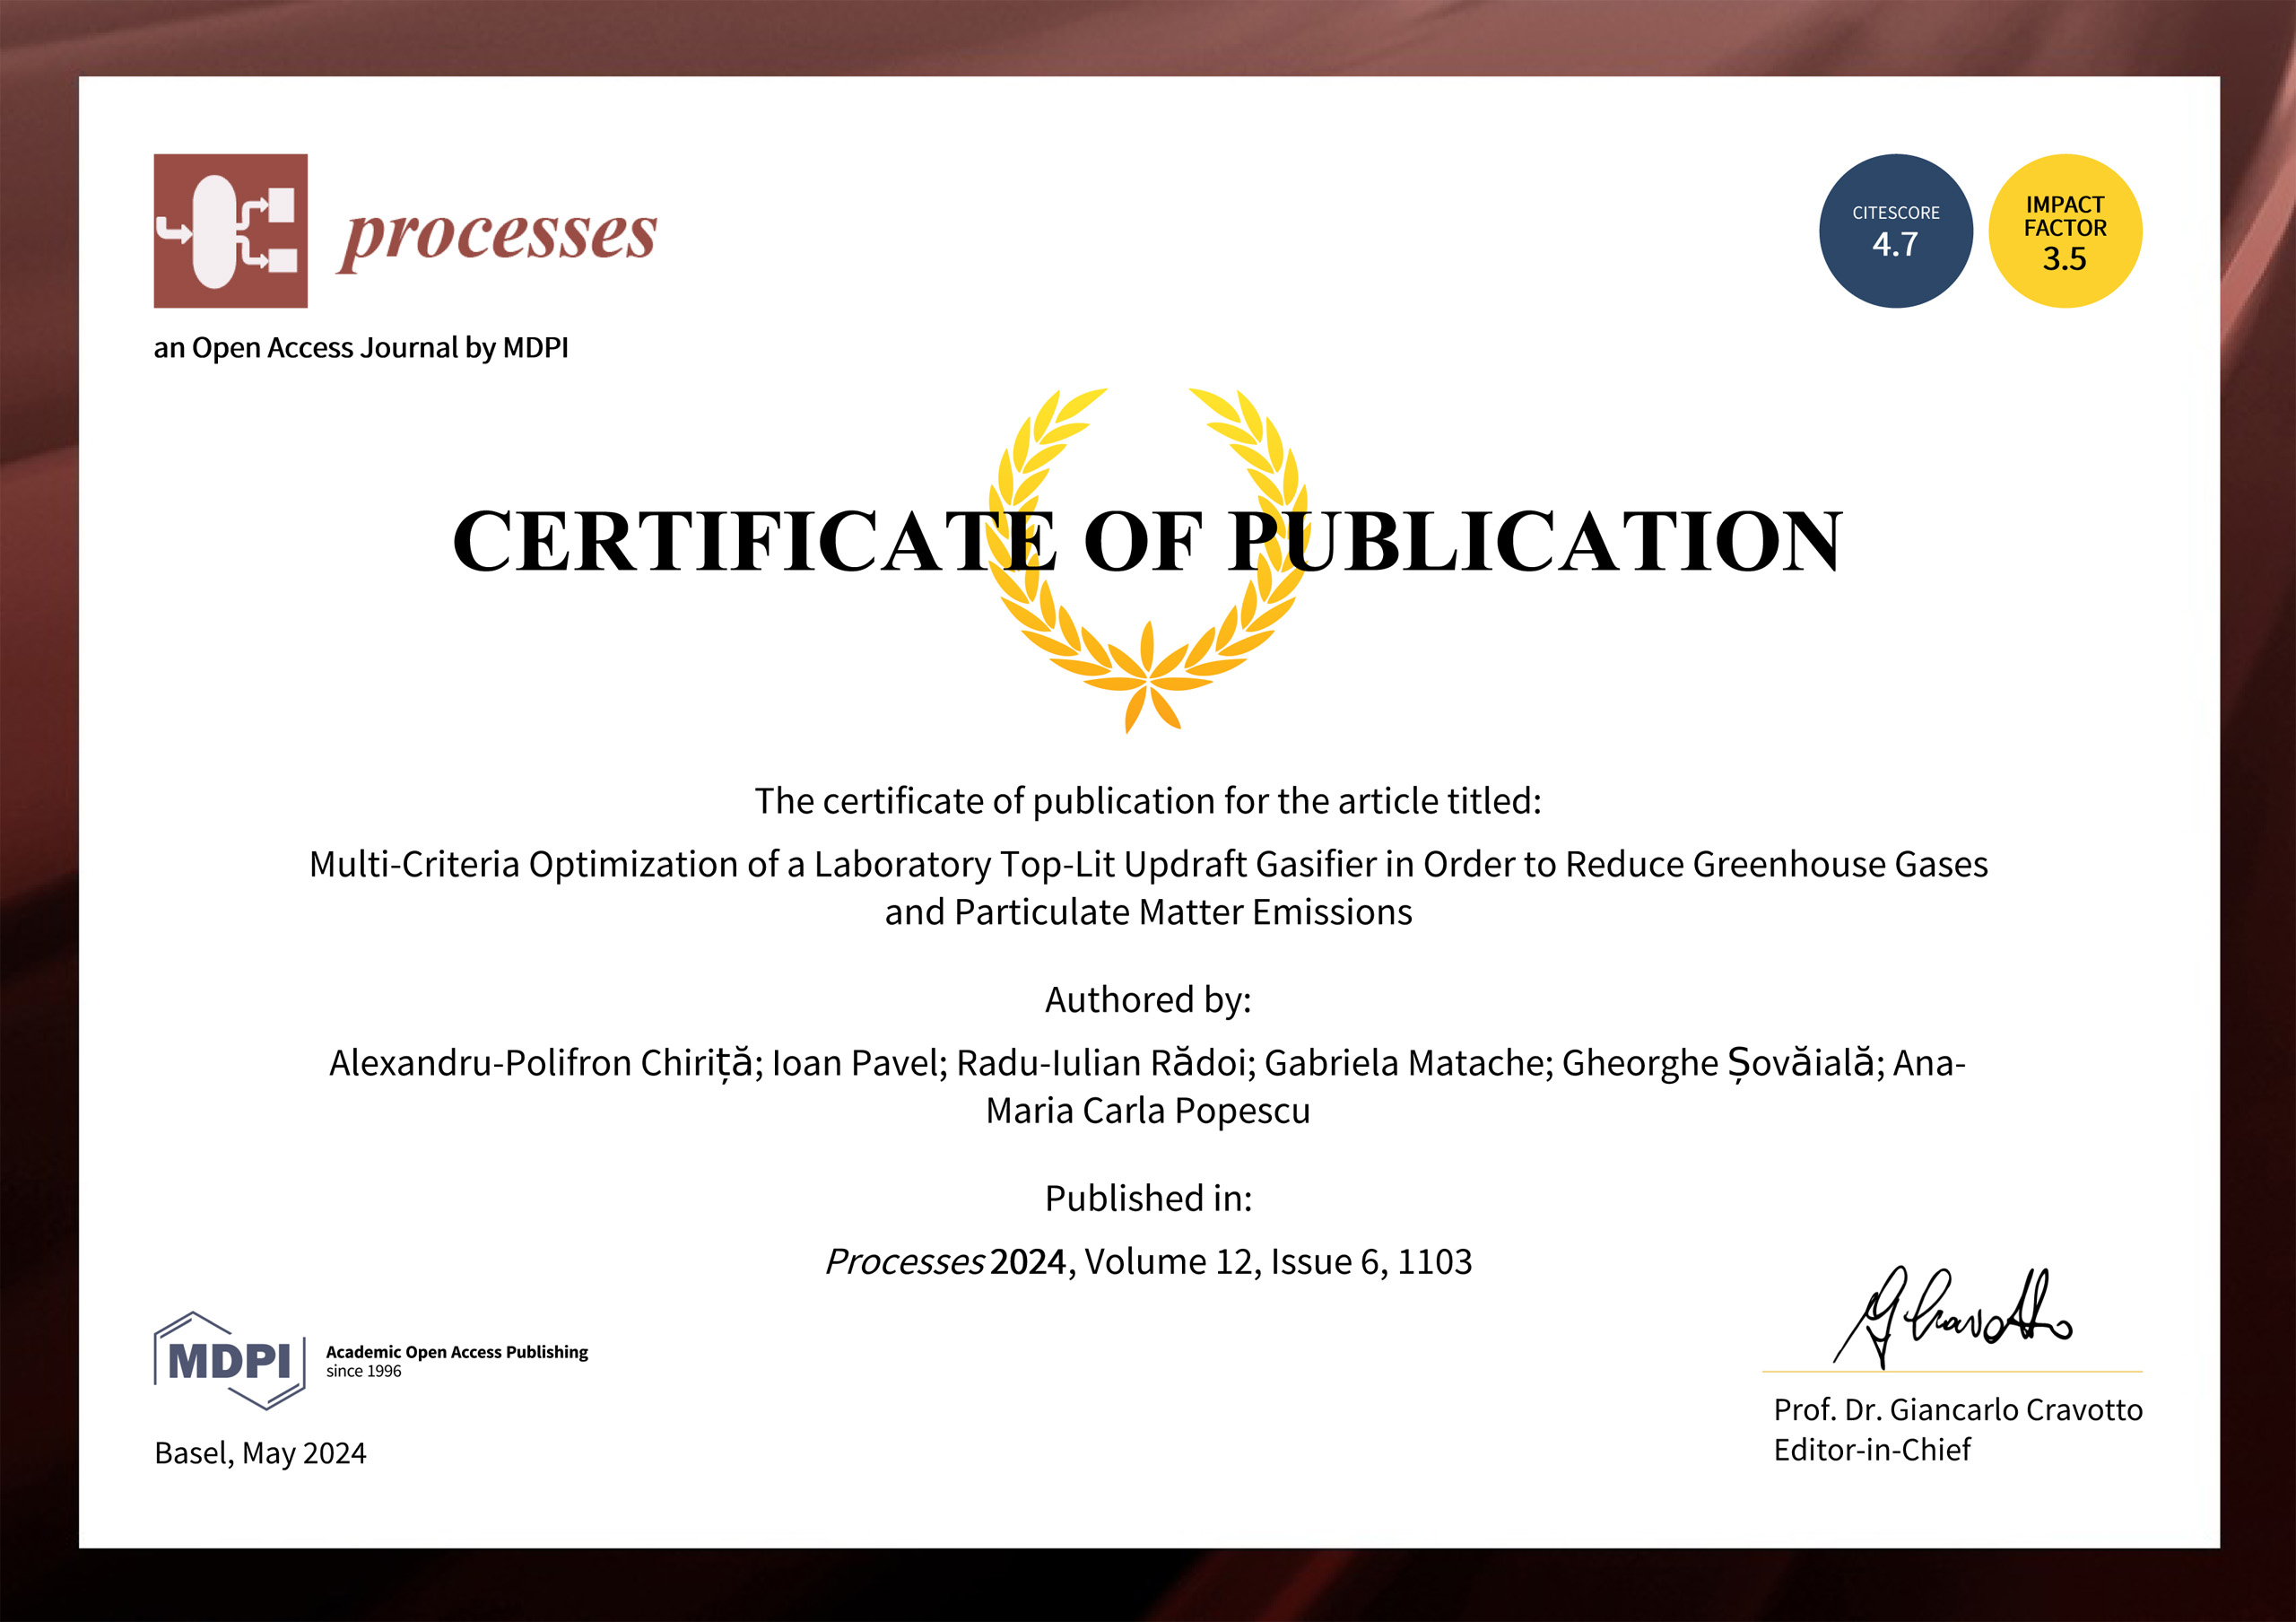 Publication Certificate MDPI_Processes